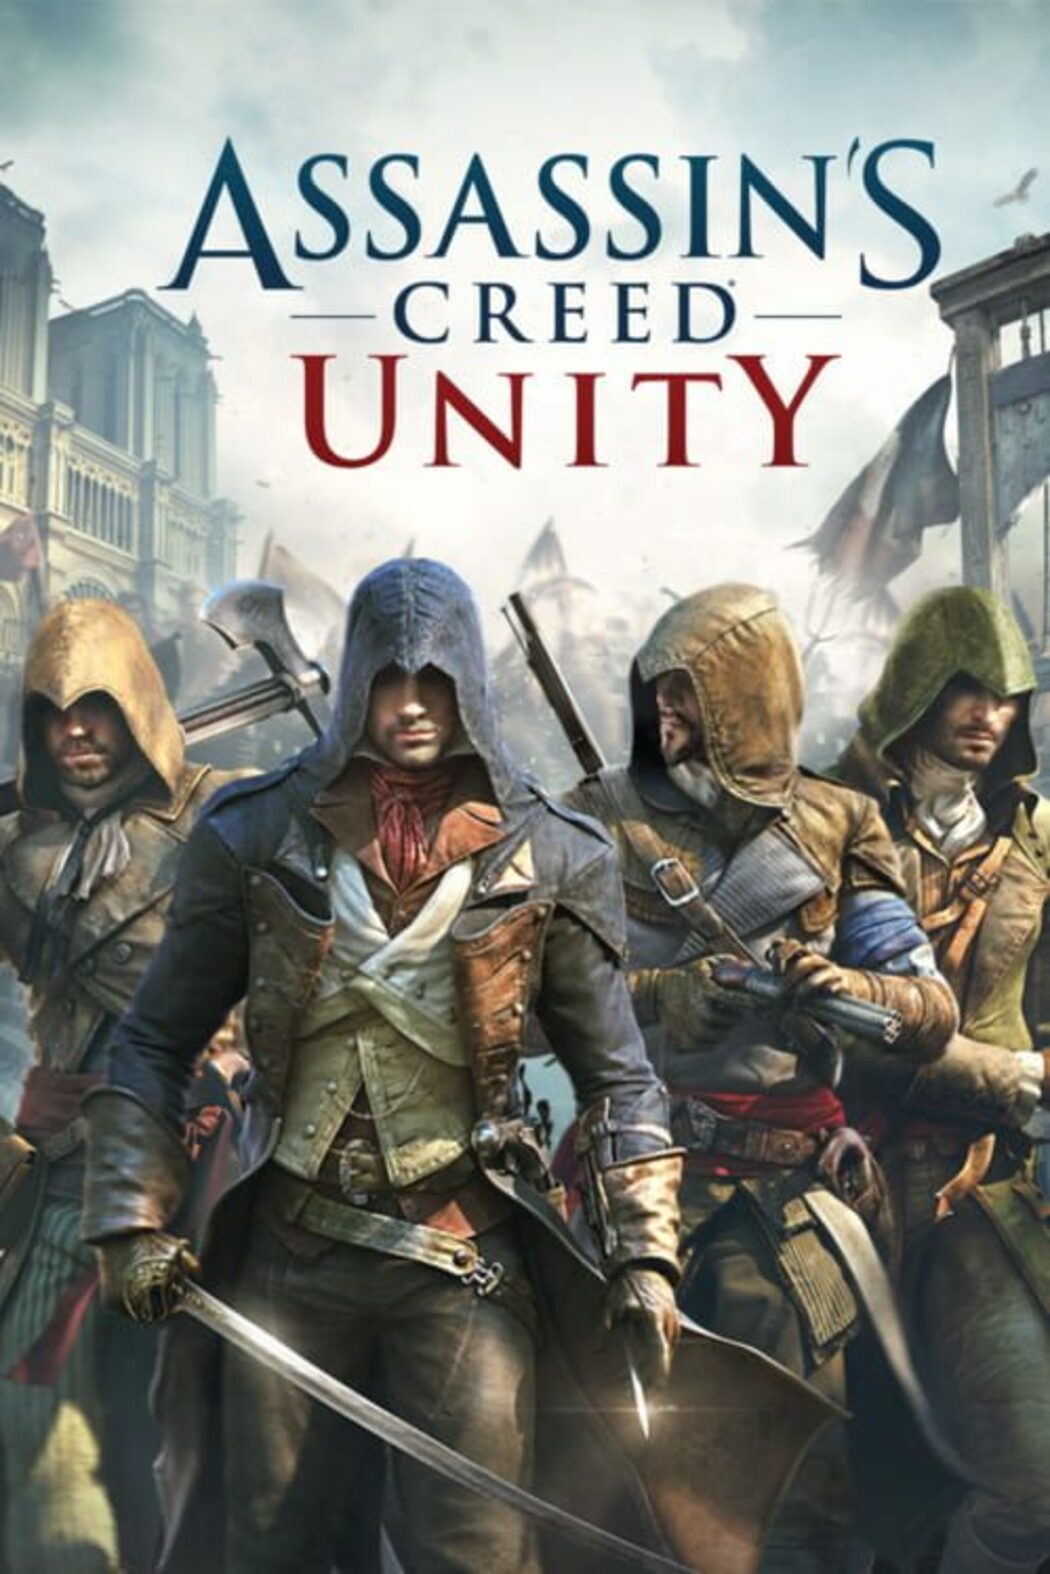 Assassin's Creed® Unity